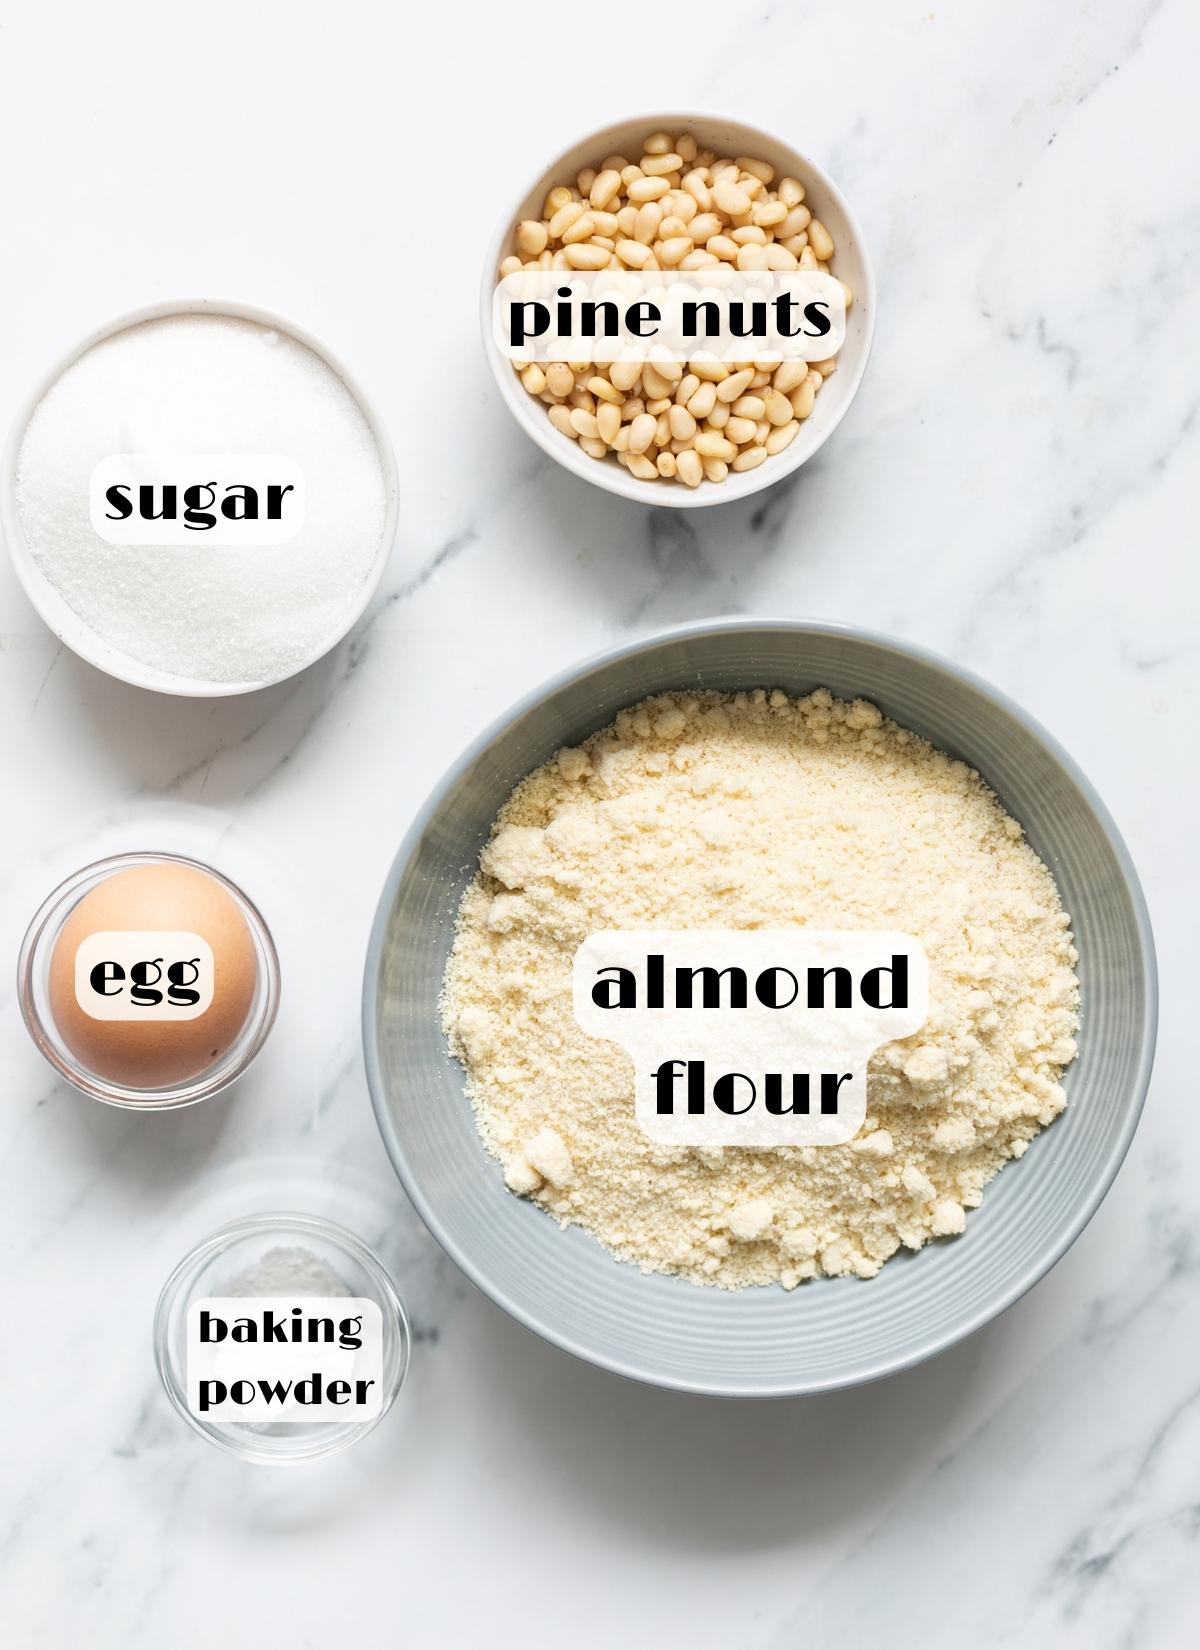 Pignoli cookies ingredients: almond flour, egg, baking powder, sugar, pine nuts.